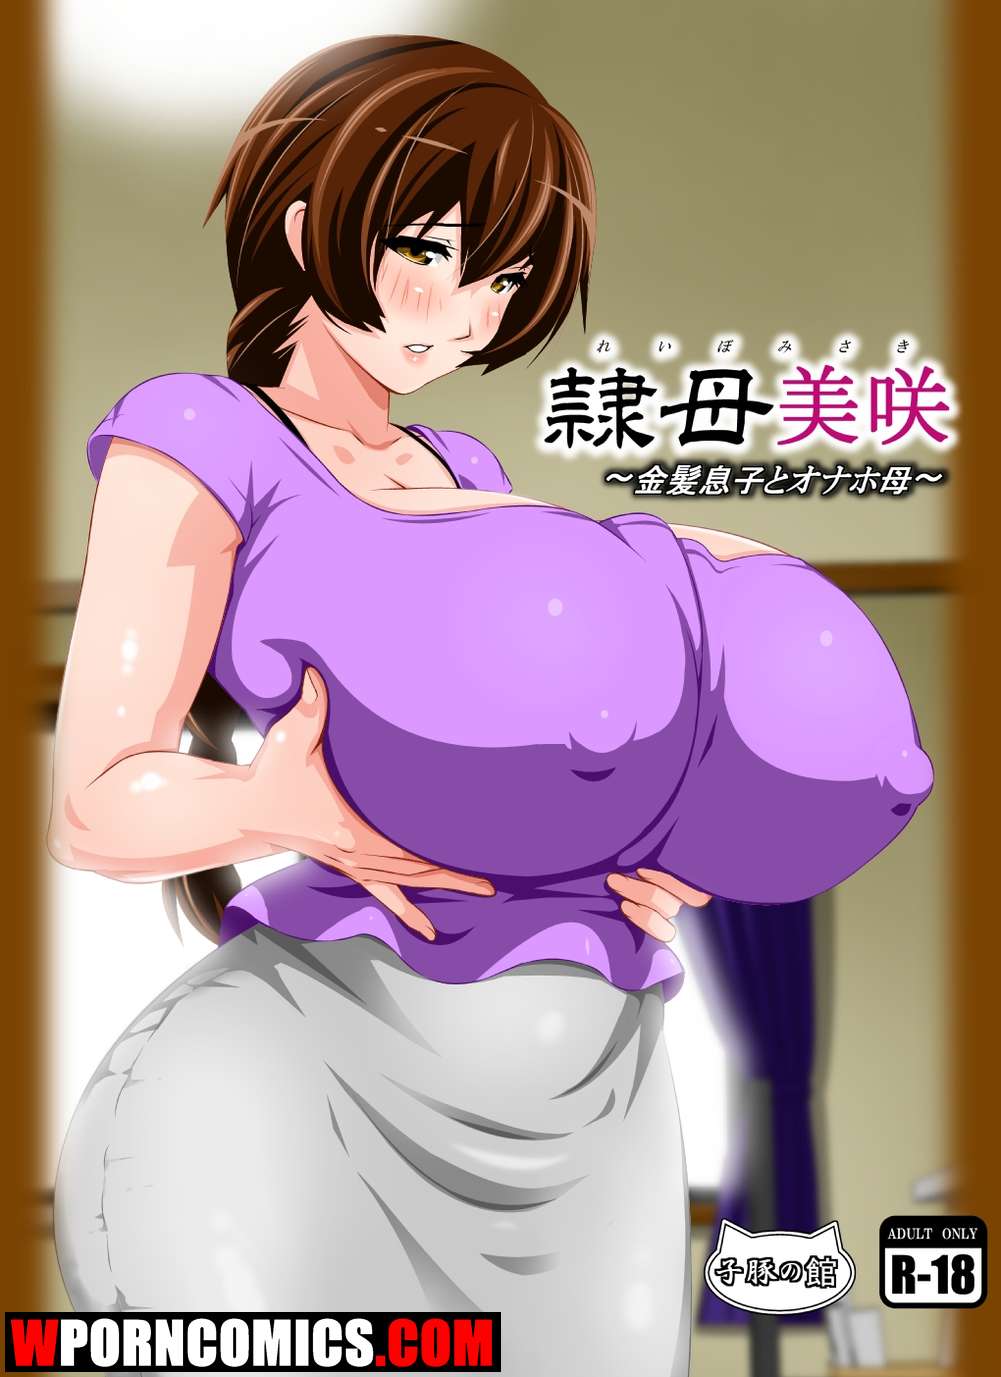 Anime women with big boobs porn comics